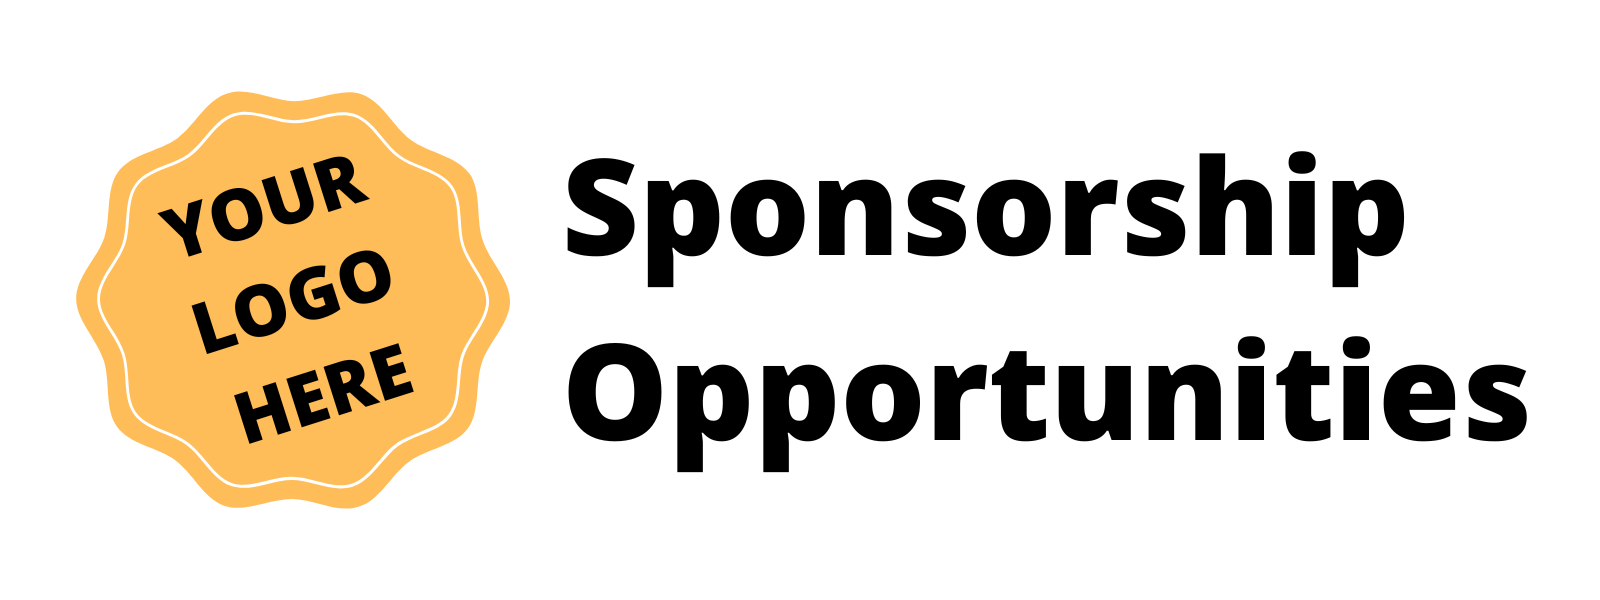 YOUR LOGO HERE: Sponsorship Opportunities